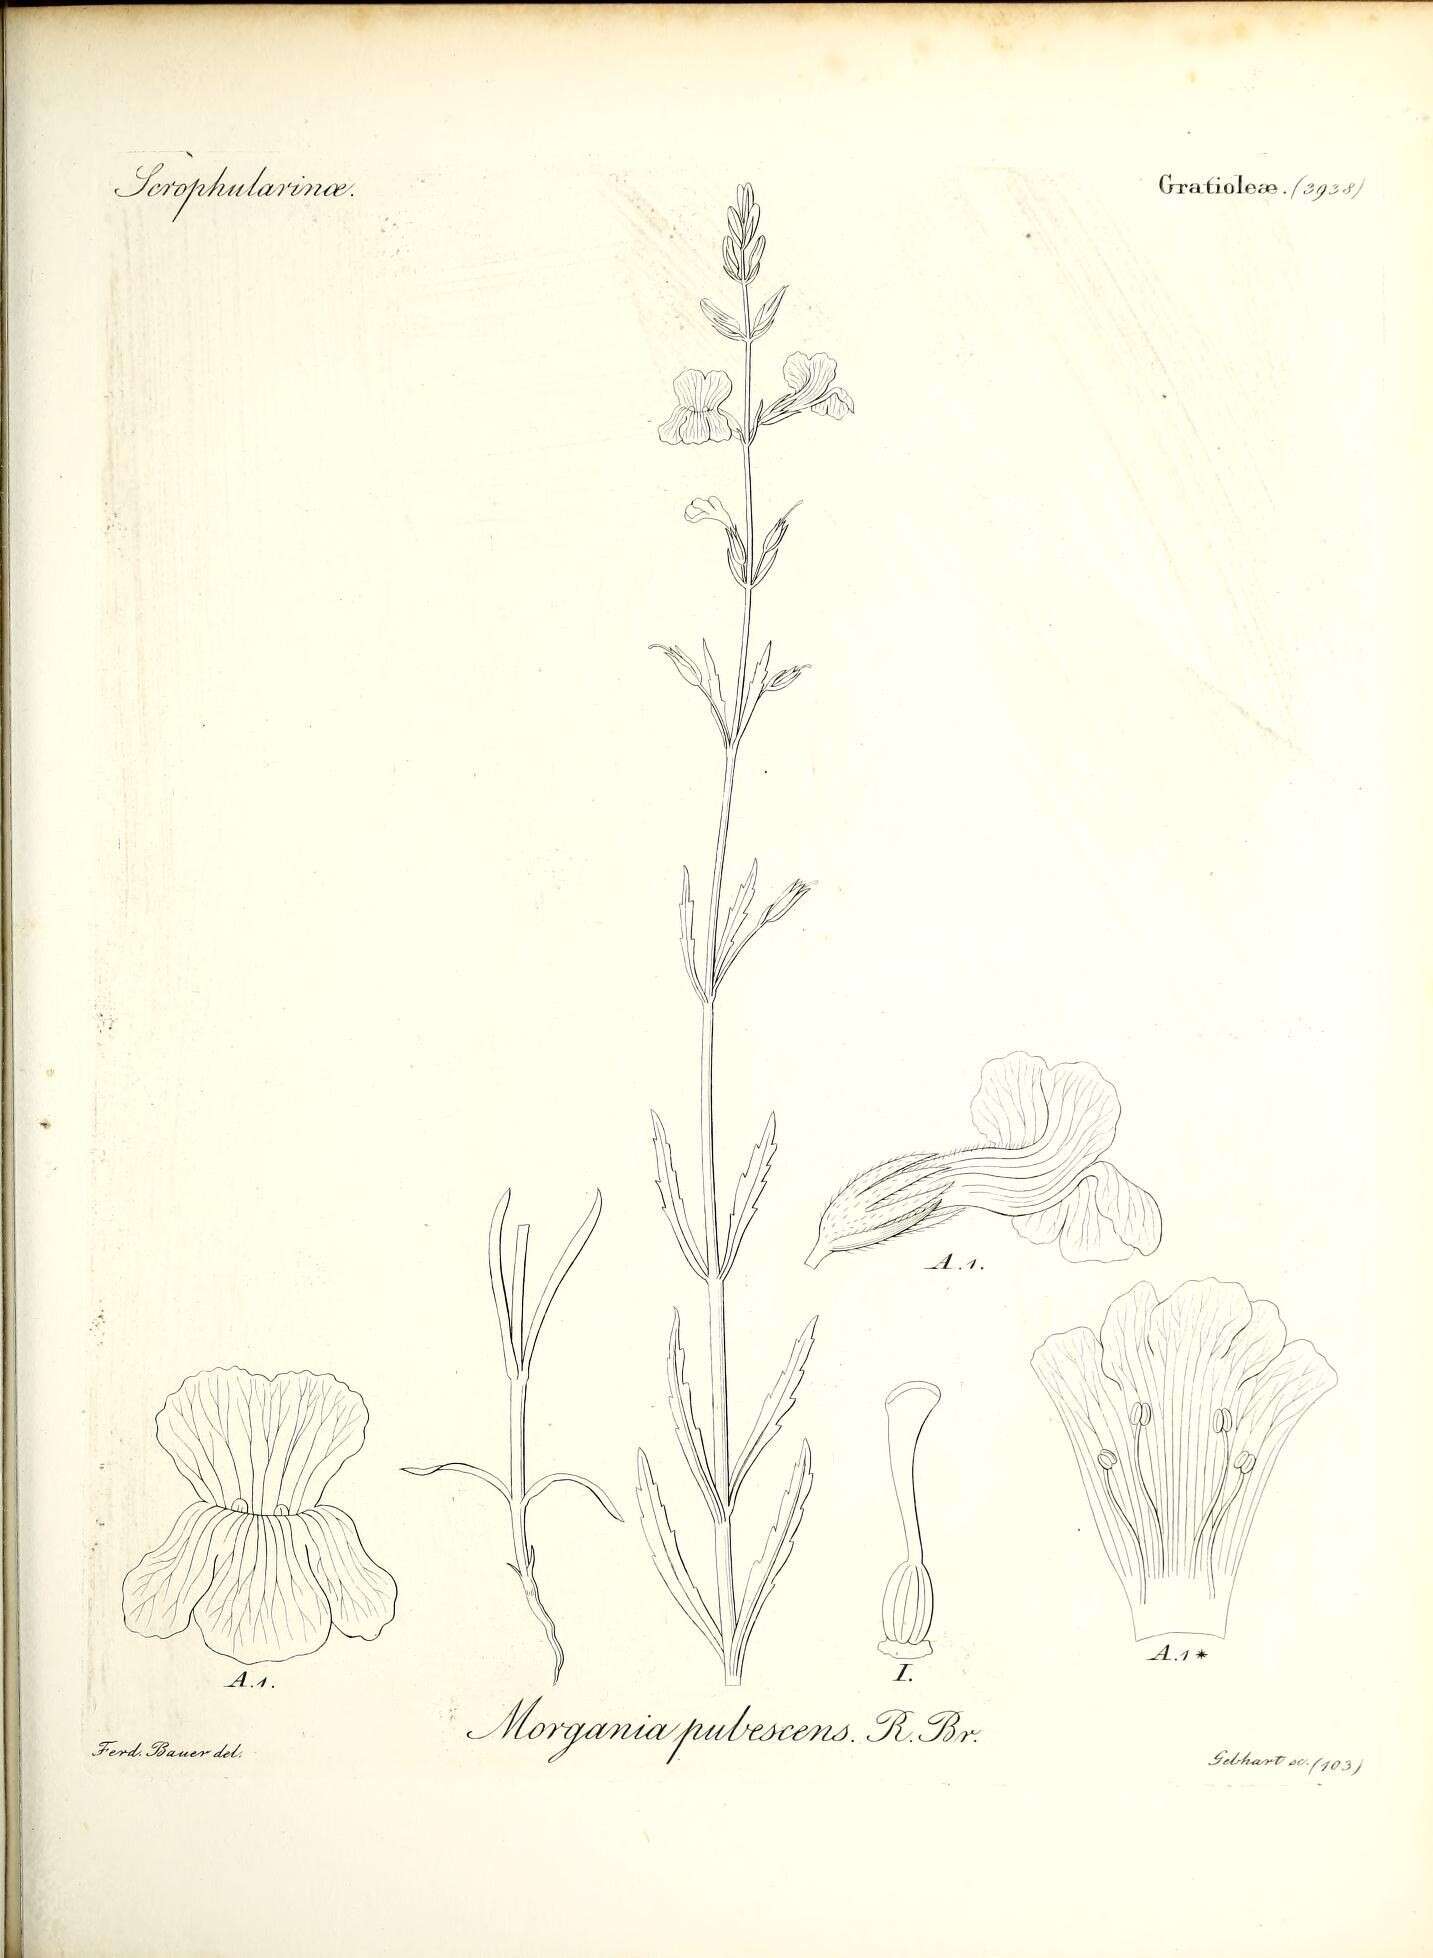 Image of Stemodia pubescens (R. Br.) W. R. Barker